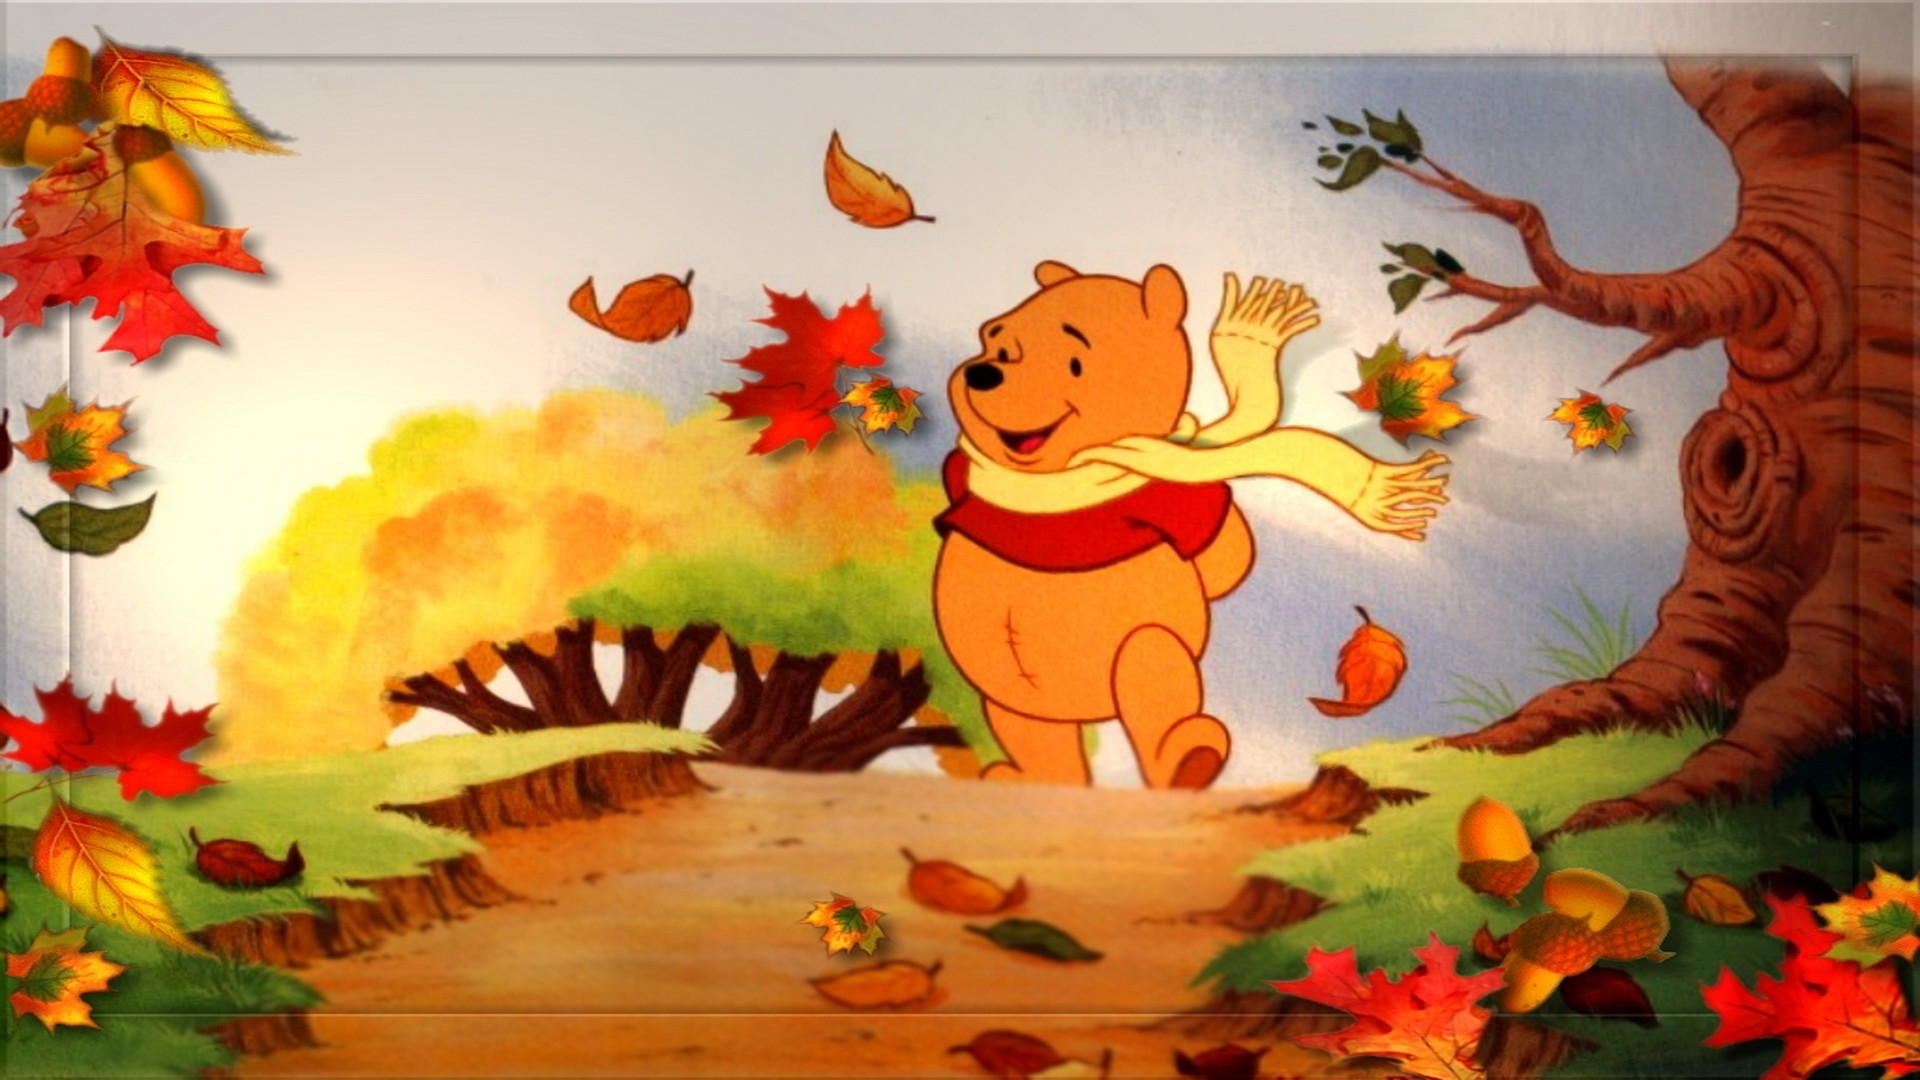 Disney Thanksgiving Wallpaper For Puter Image